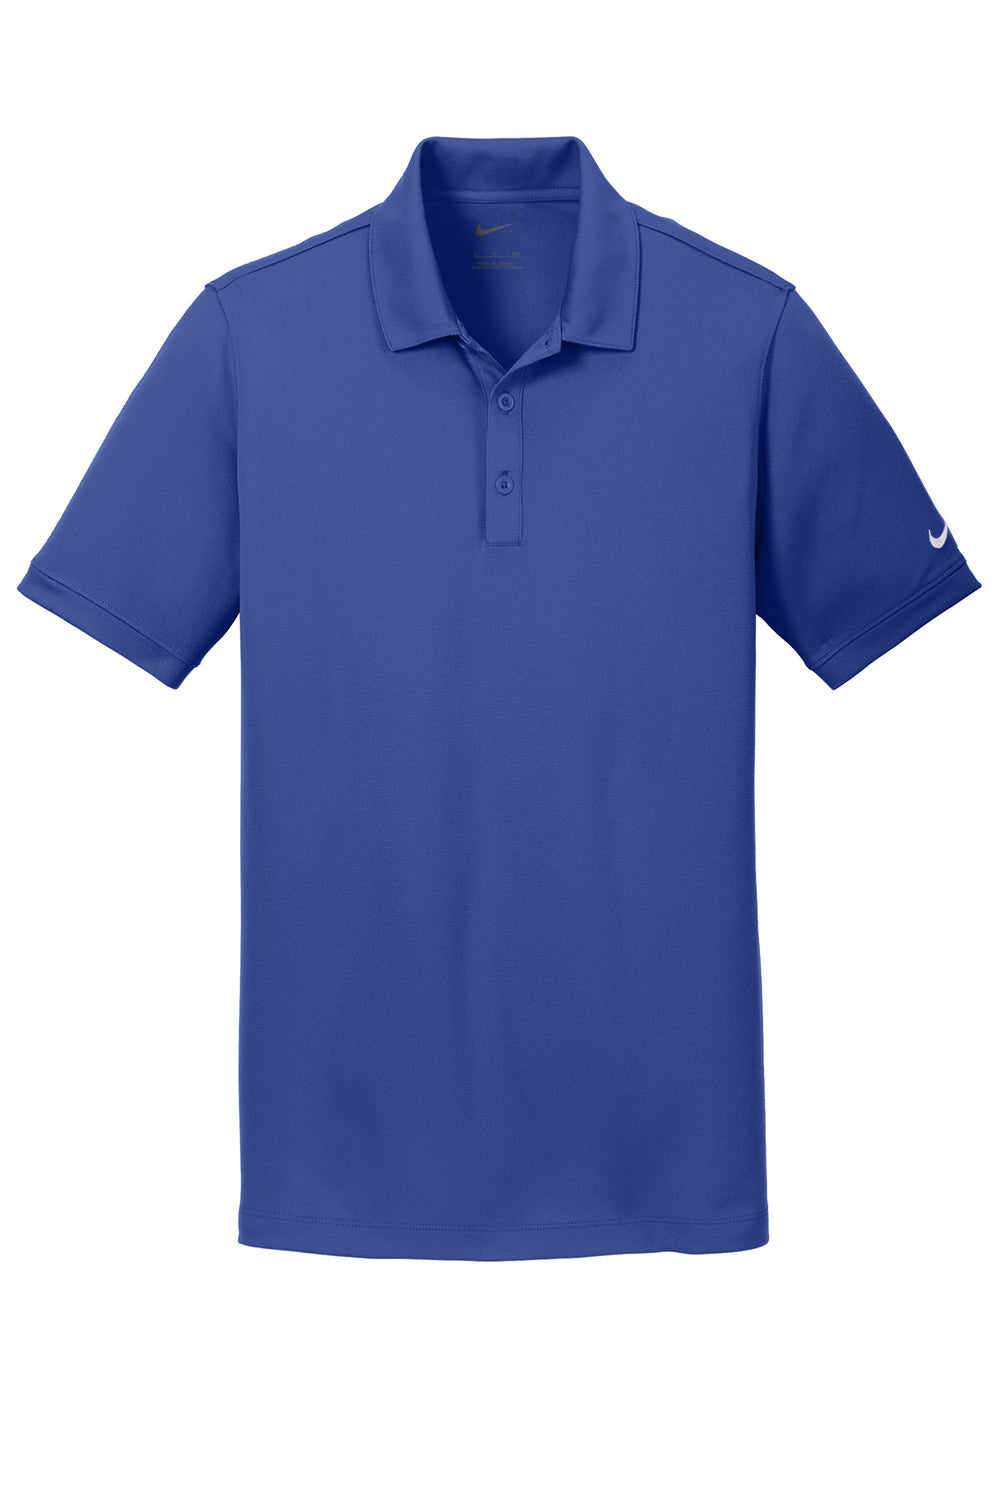 Nike 746099 Mens Icon Dri-Fit Moisture Wicking Short Sleeve Polo Shirt Royal Blue Flat Front